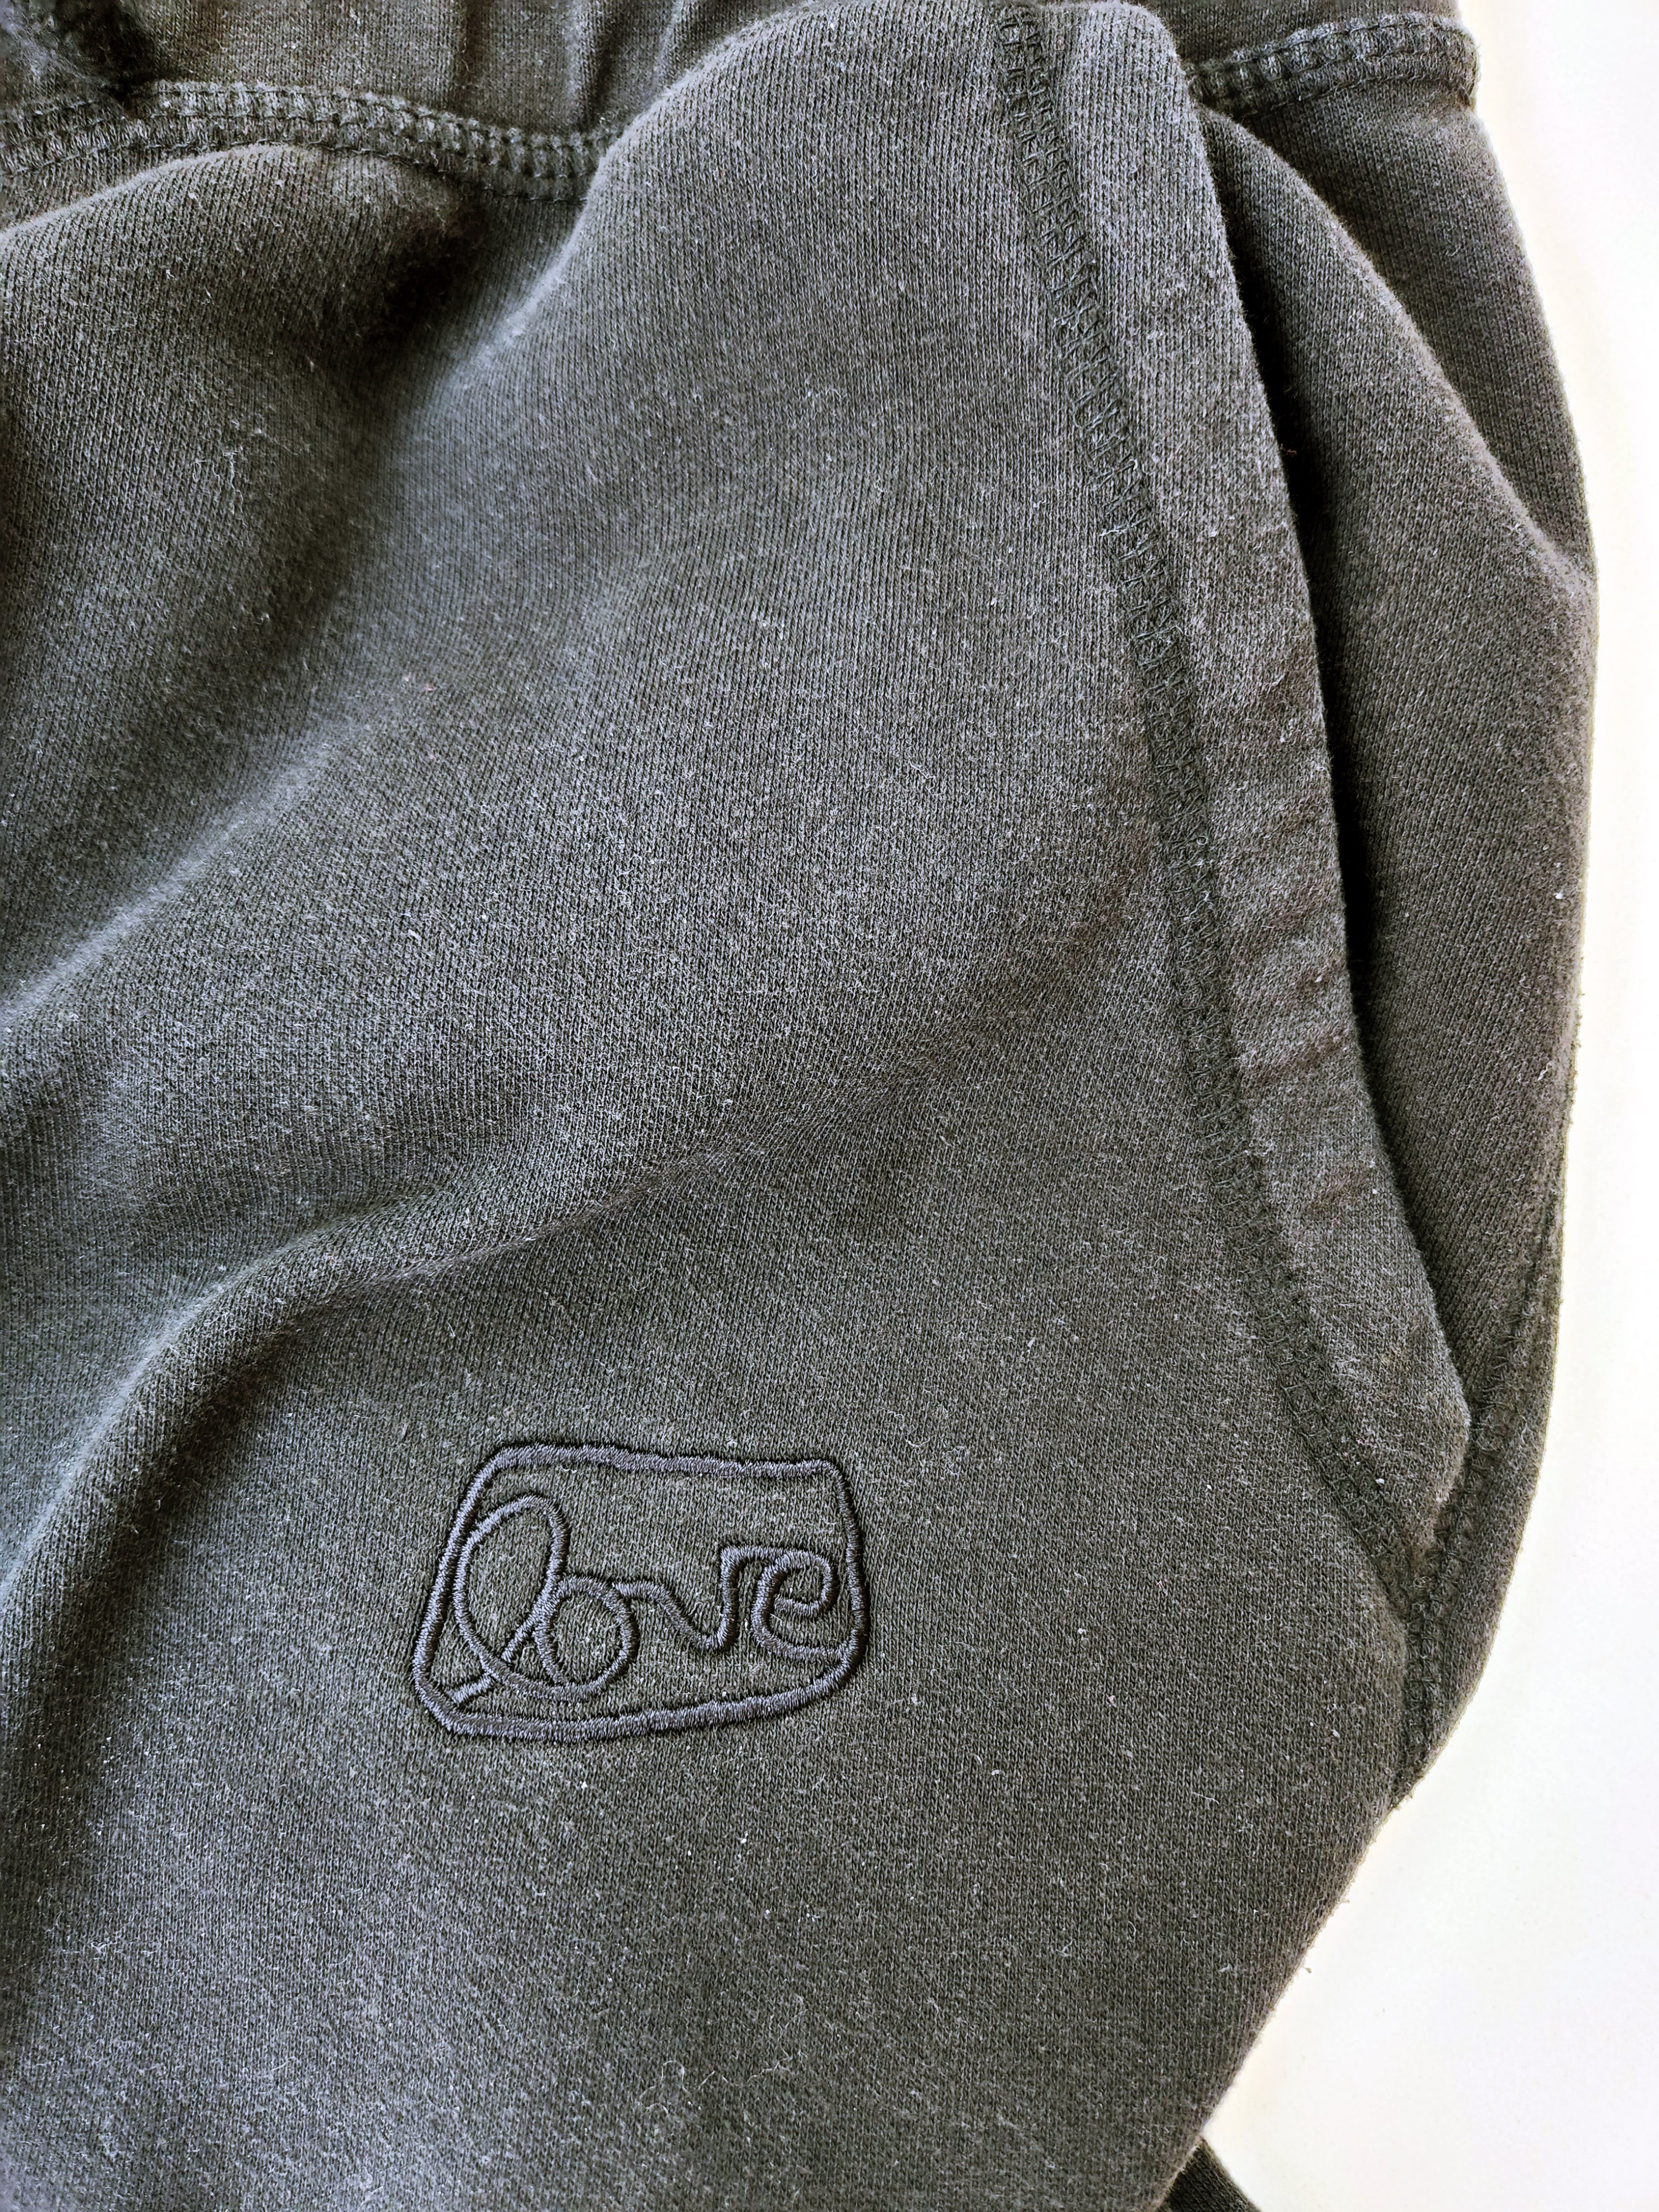 Black LOVE embroidered sweatpants